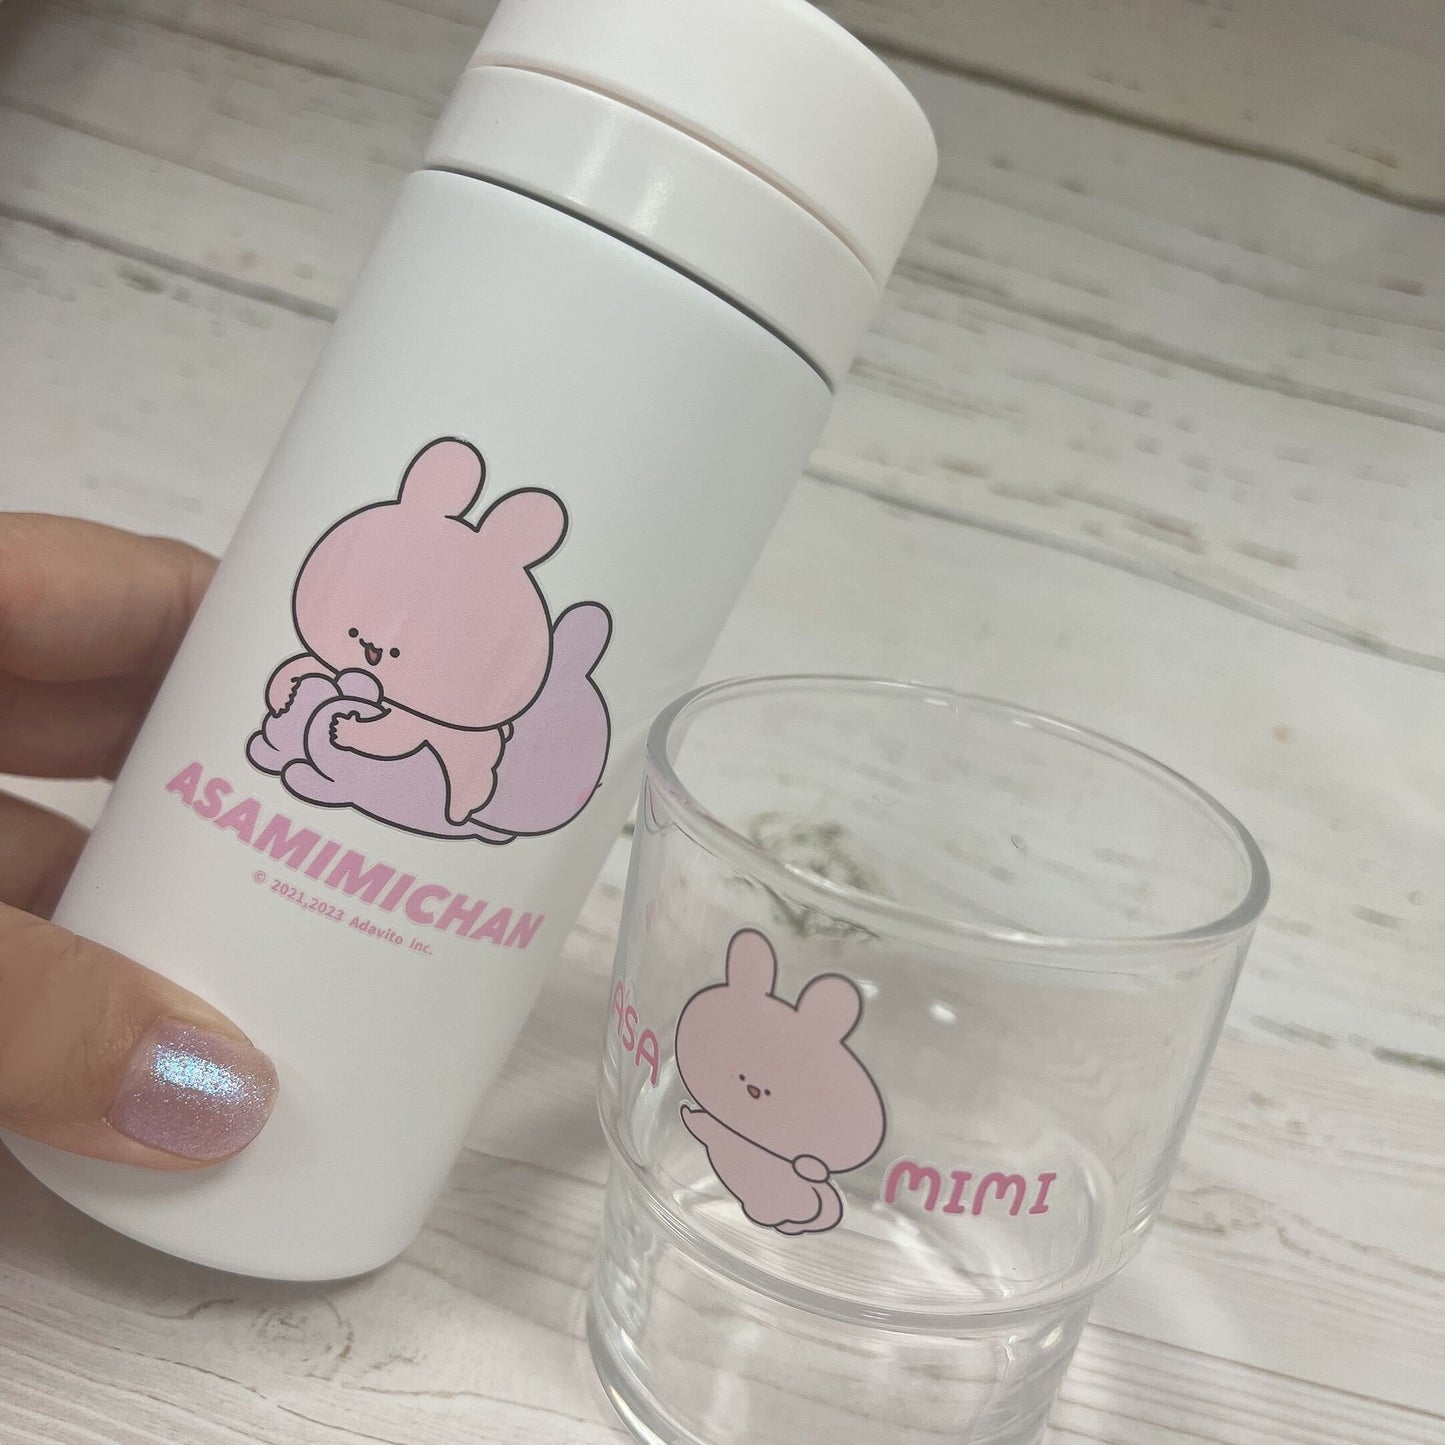 [Asamimi-chan] Water glass (Asamimi BASIC May) [Shipped in mid-July]